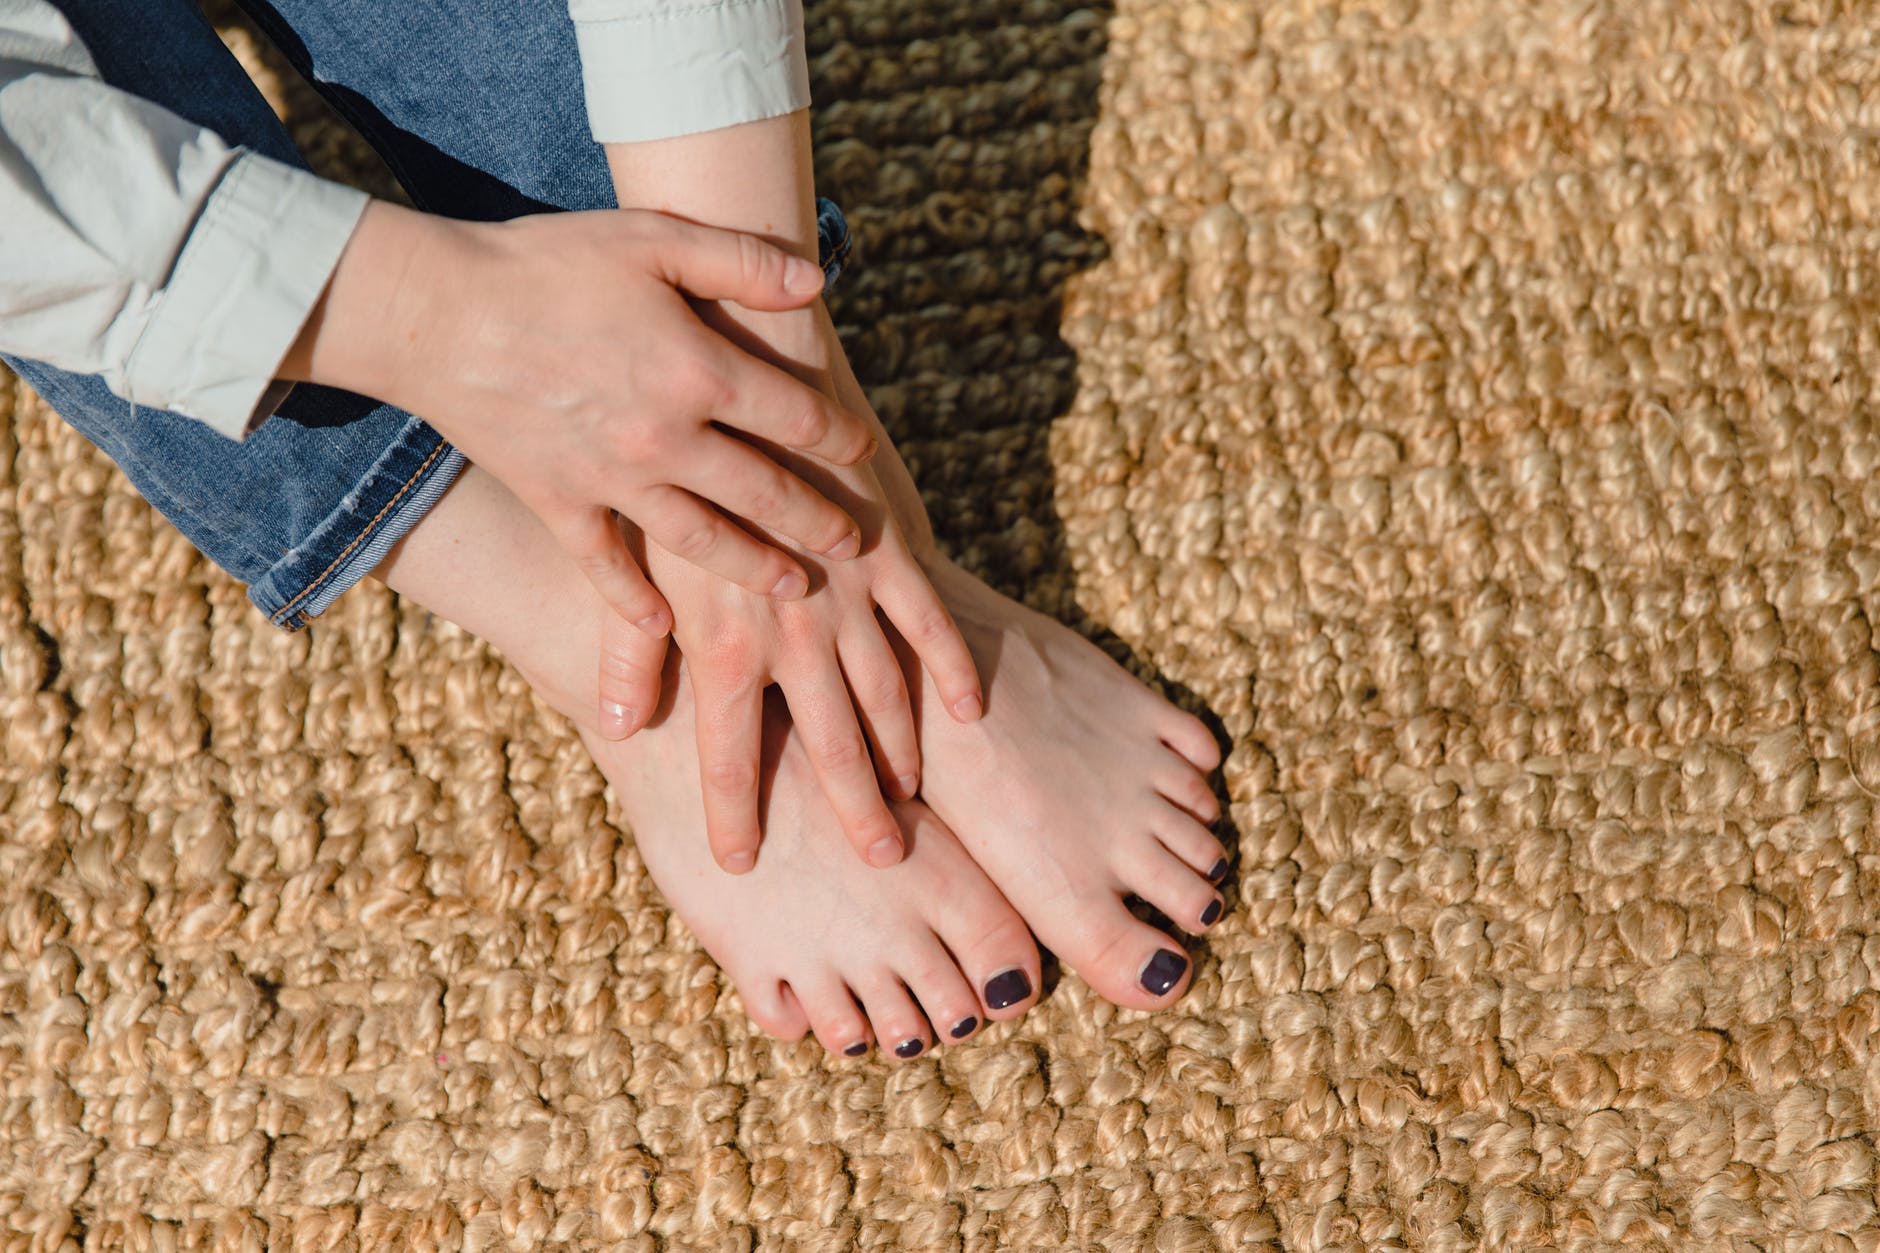 Petominutna masaža prstiju


feet of a woman with manicured nails